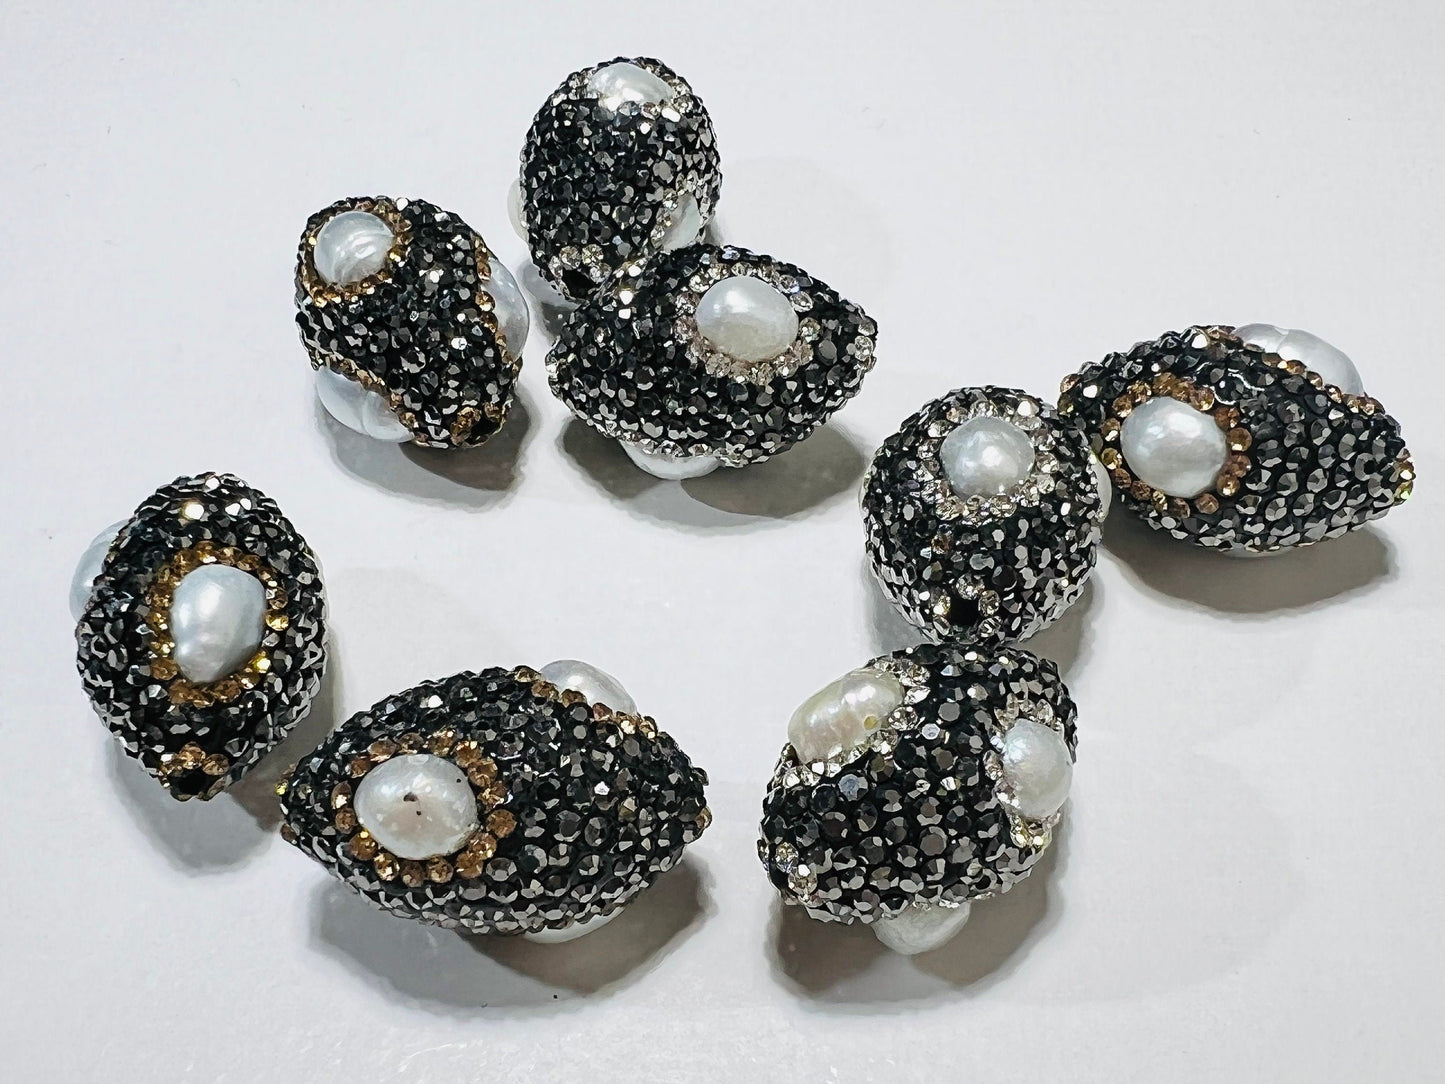 Freshwater Keshi Pearl, Inlaid Black Rhinestone Crystal Handmade Fancy Focal Bead, 17x24mm, 1 pc, Jewelry Making Bling Oval Spacer Bead